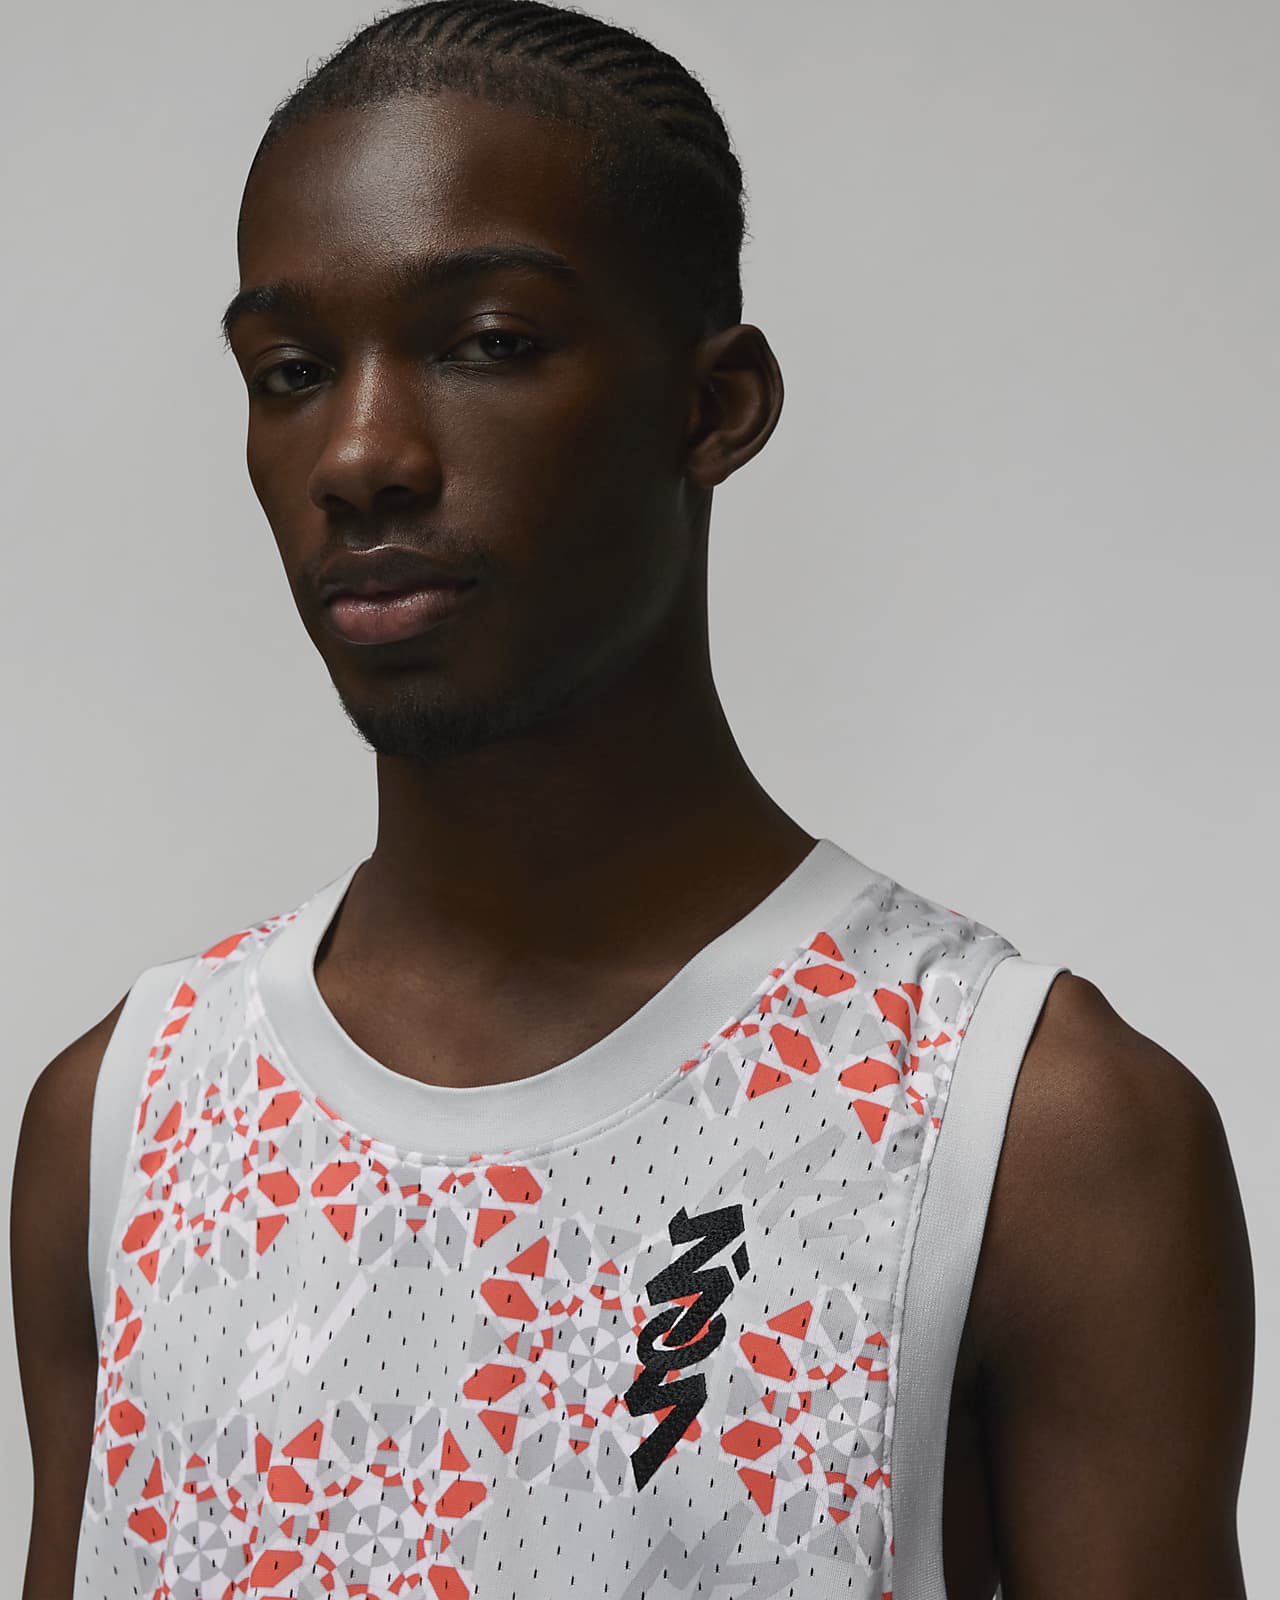 Nathaniel Ward vocal aliviar Zion Camiseta de malla - Hombre. Nike ES